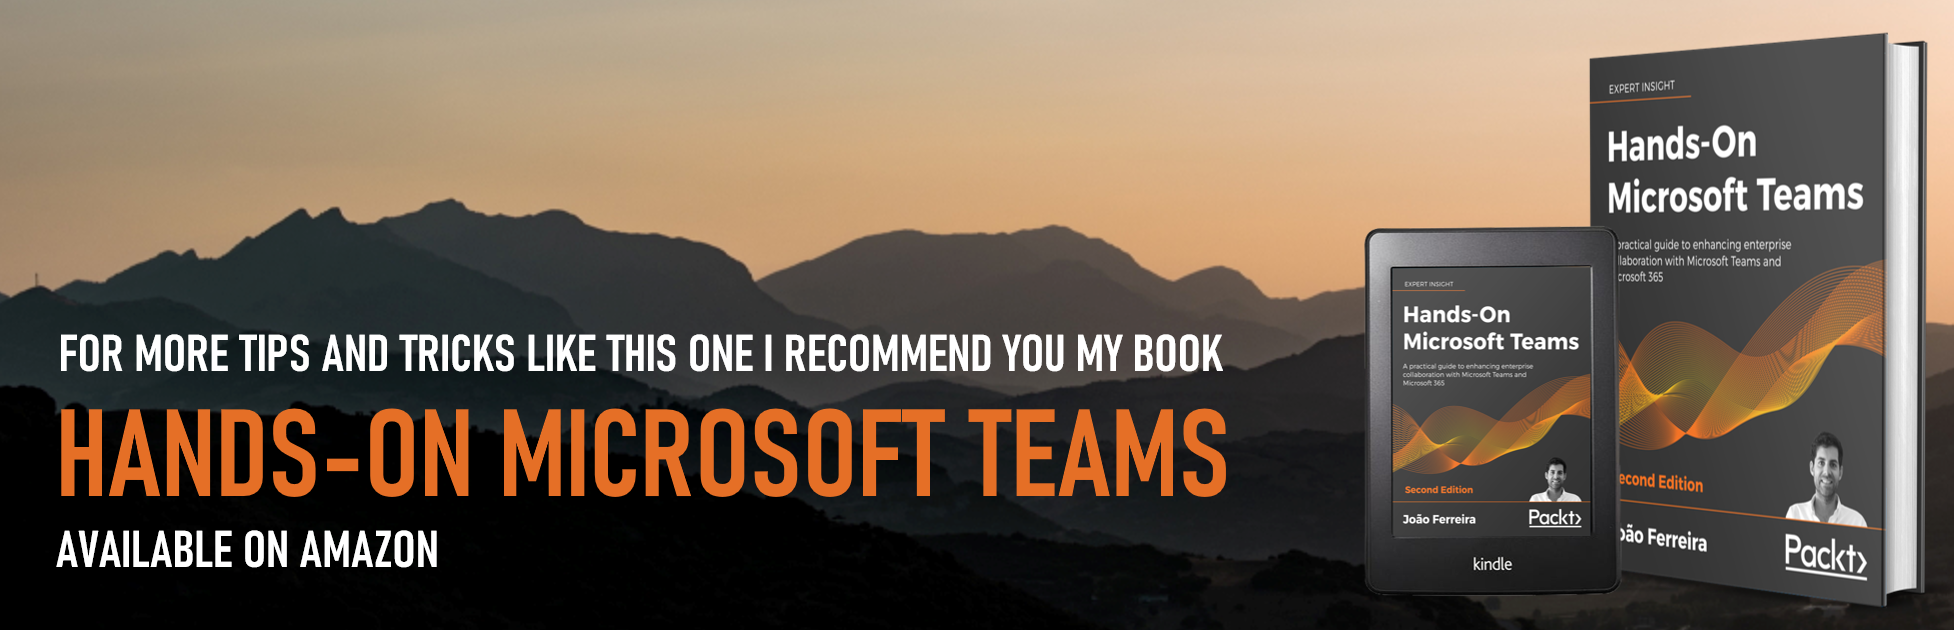 Hands-On Microsoft Teams book